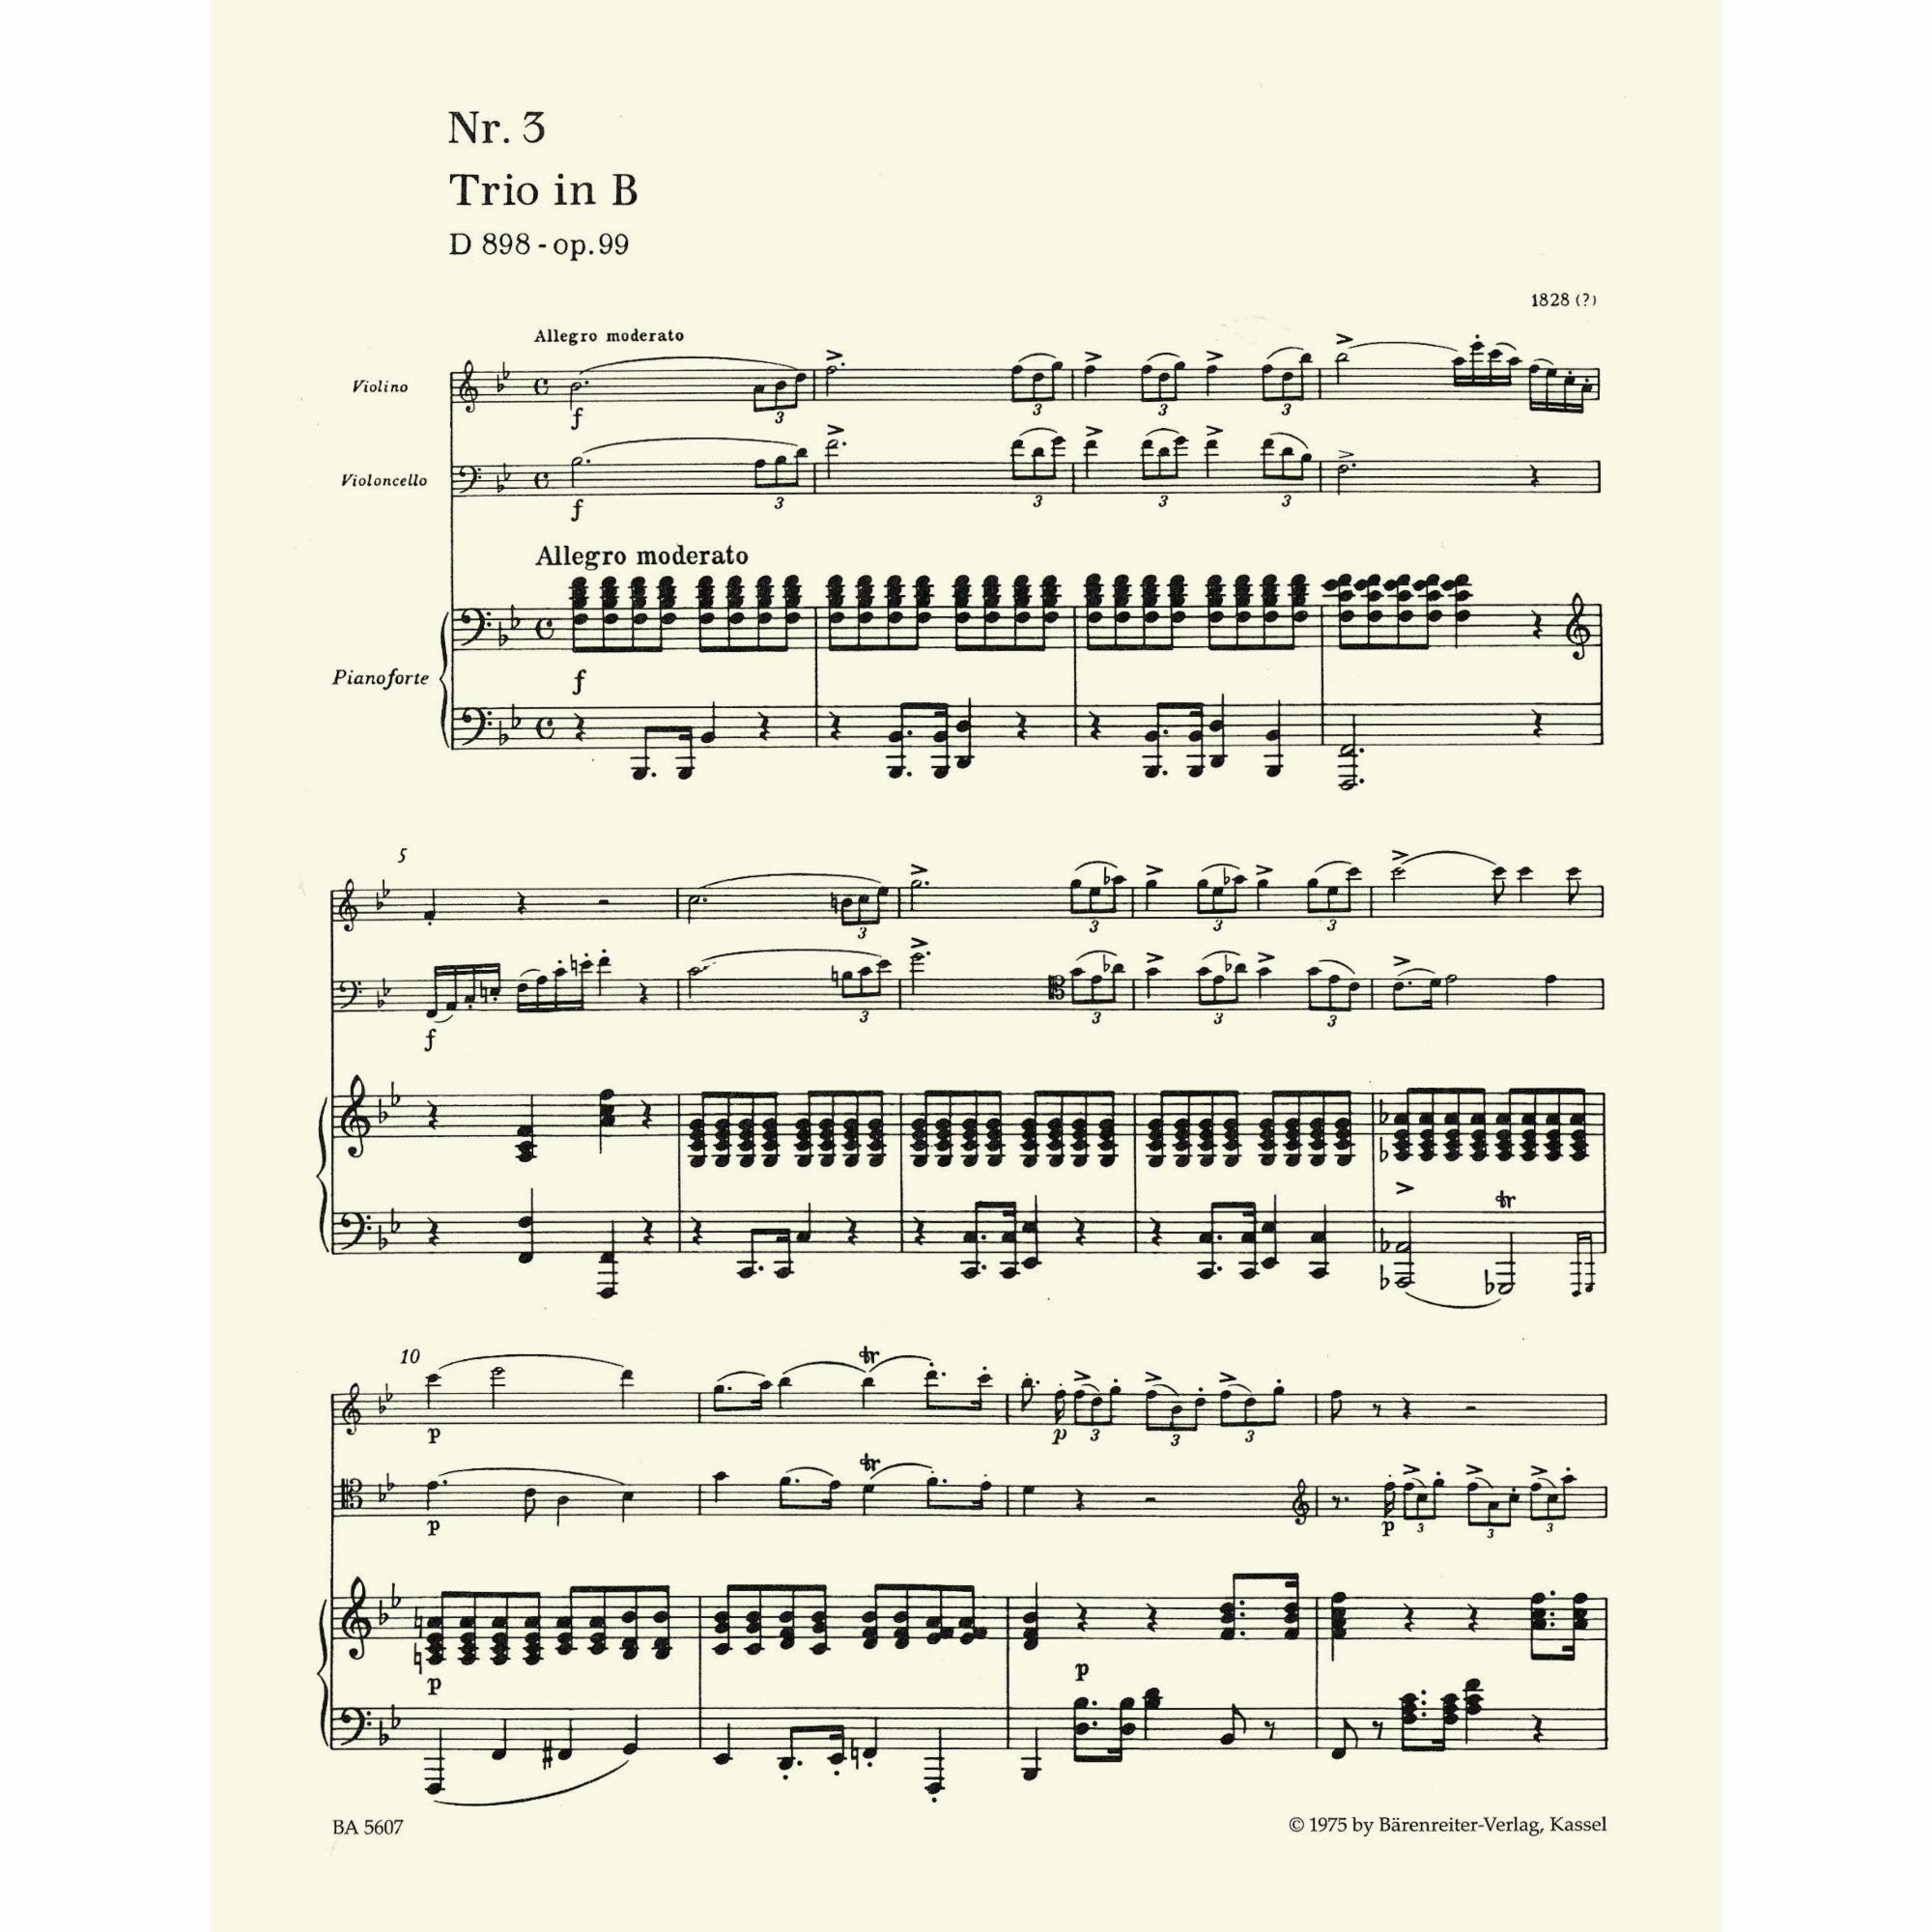 Sample: Piano (Pg. 5)